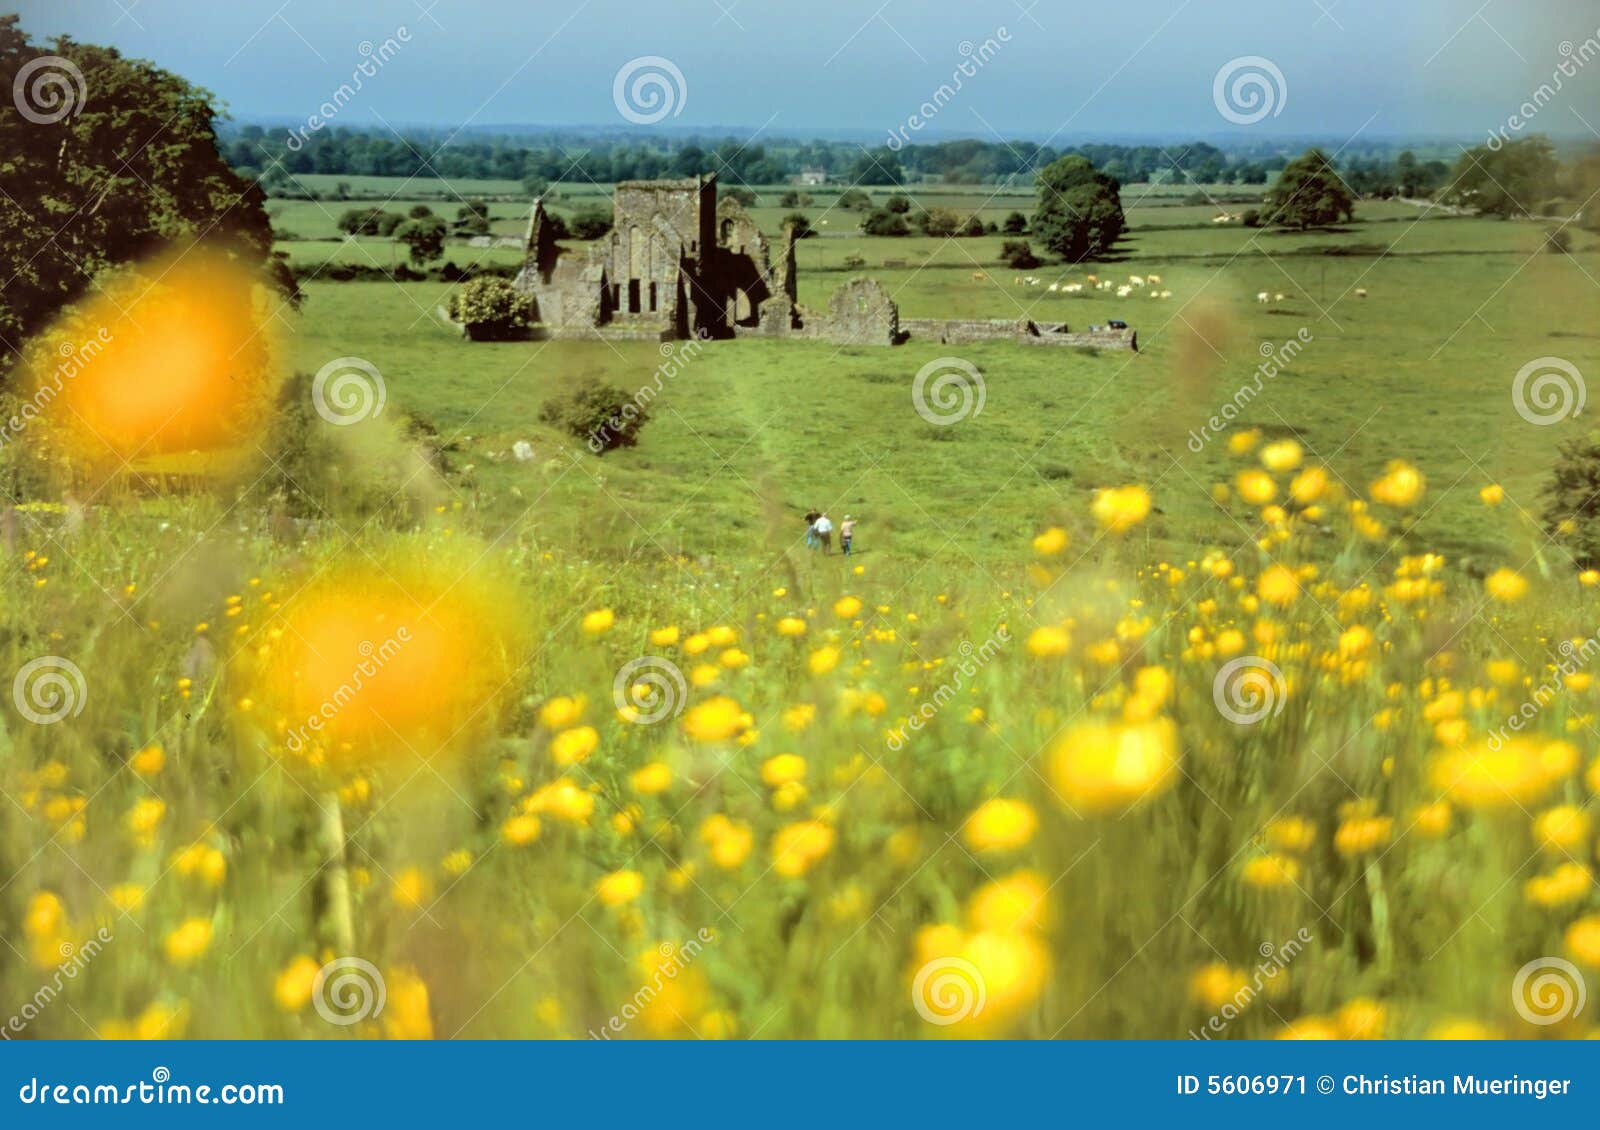 castle ruin within green meadows